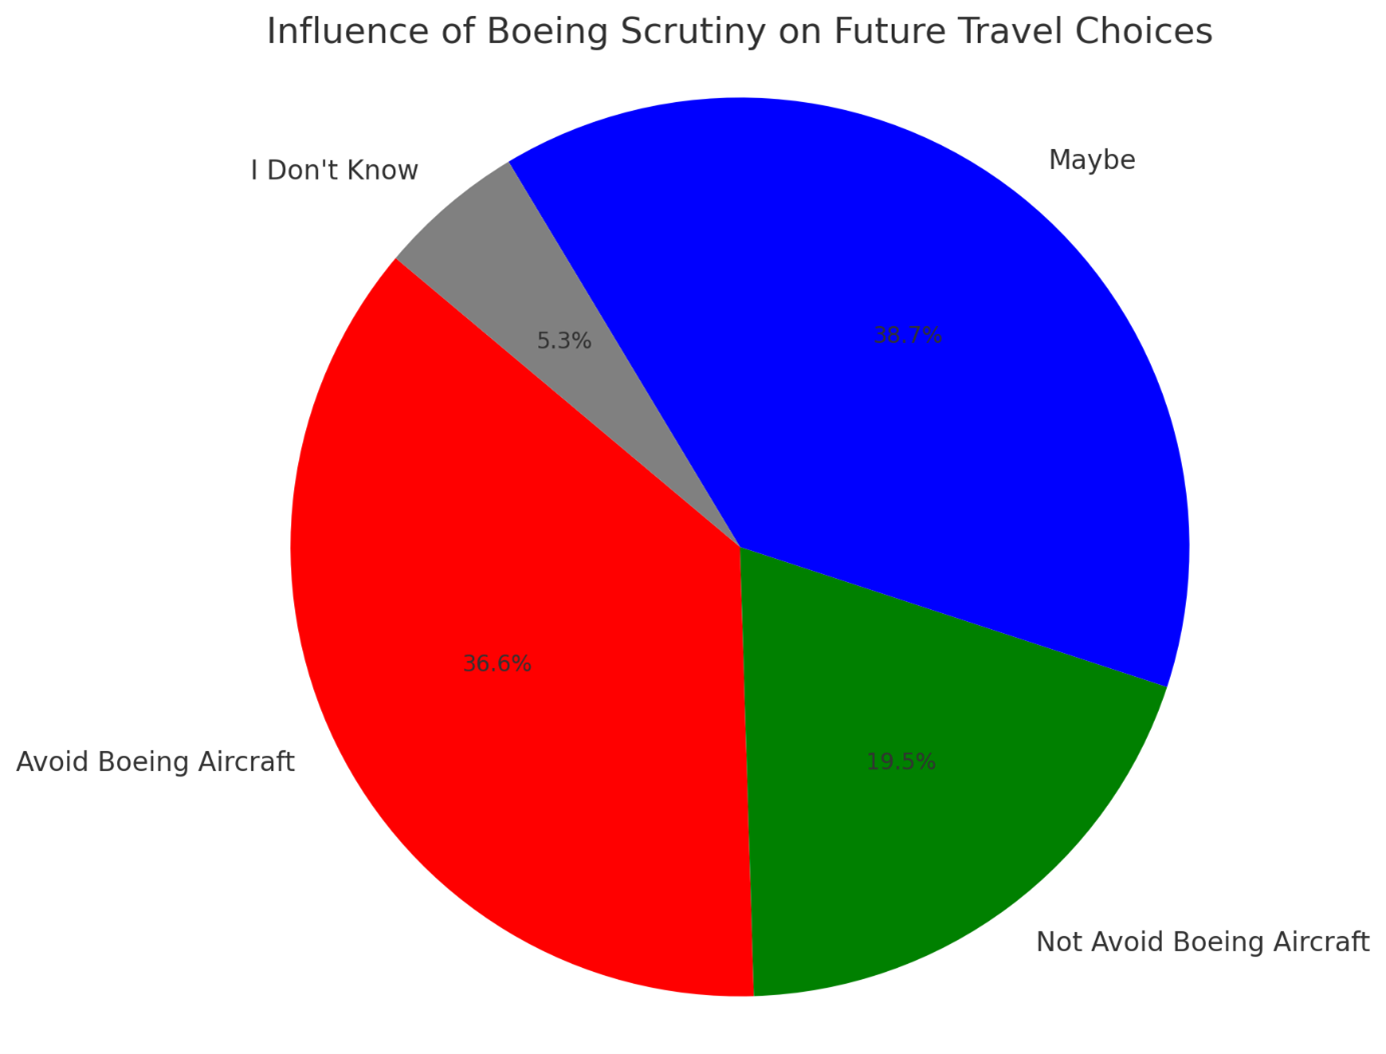 Avoiding Boeing Aircraft